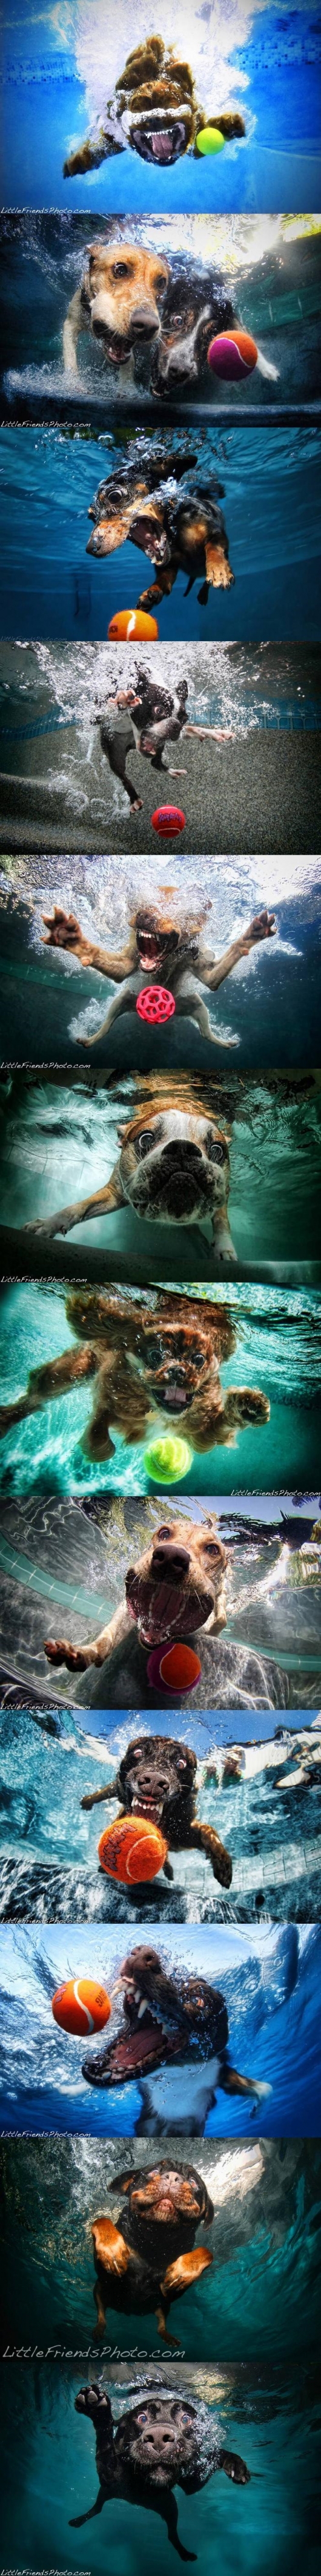 Dogs chasing balls underwater